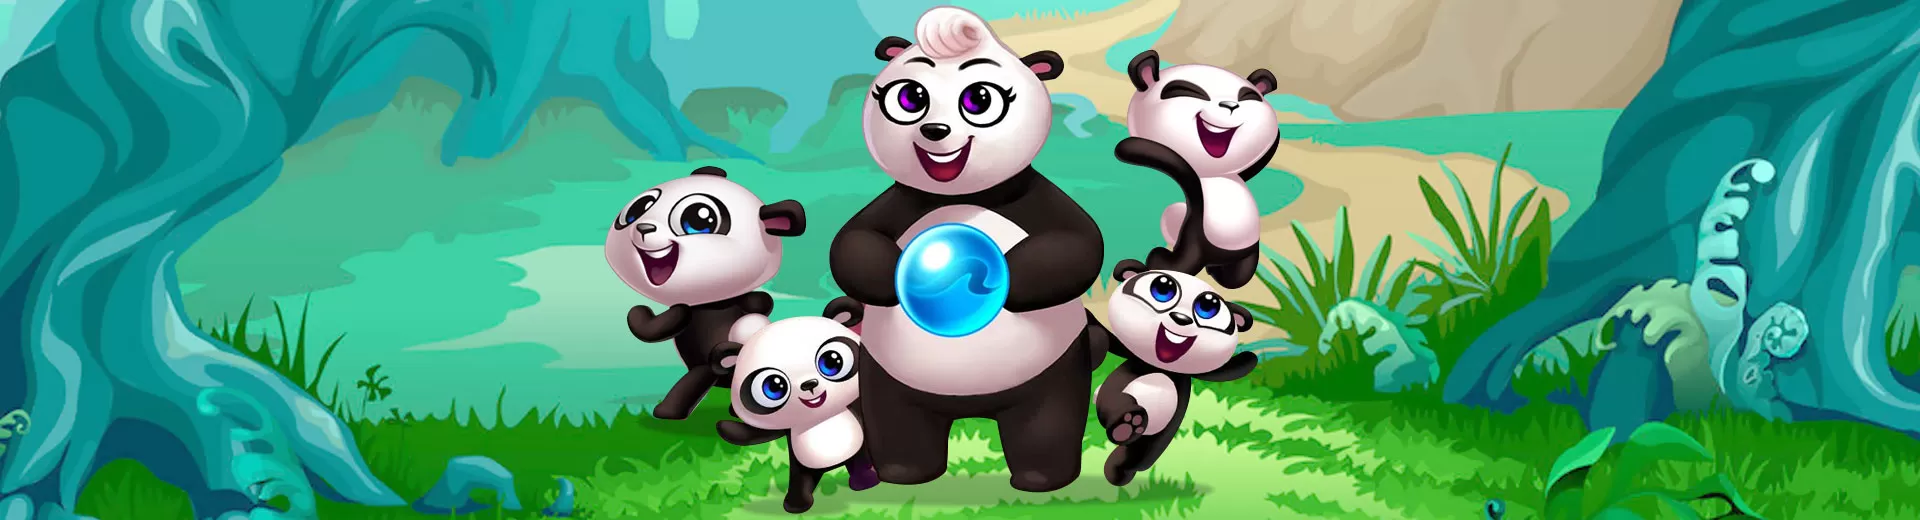 Panda Pop Emulator Pc